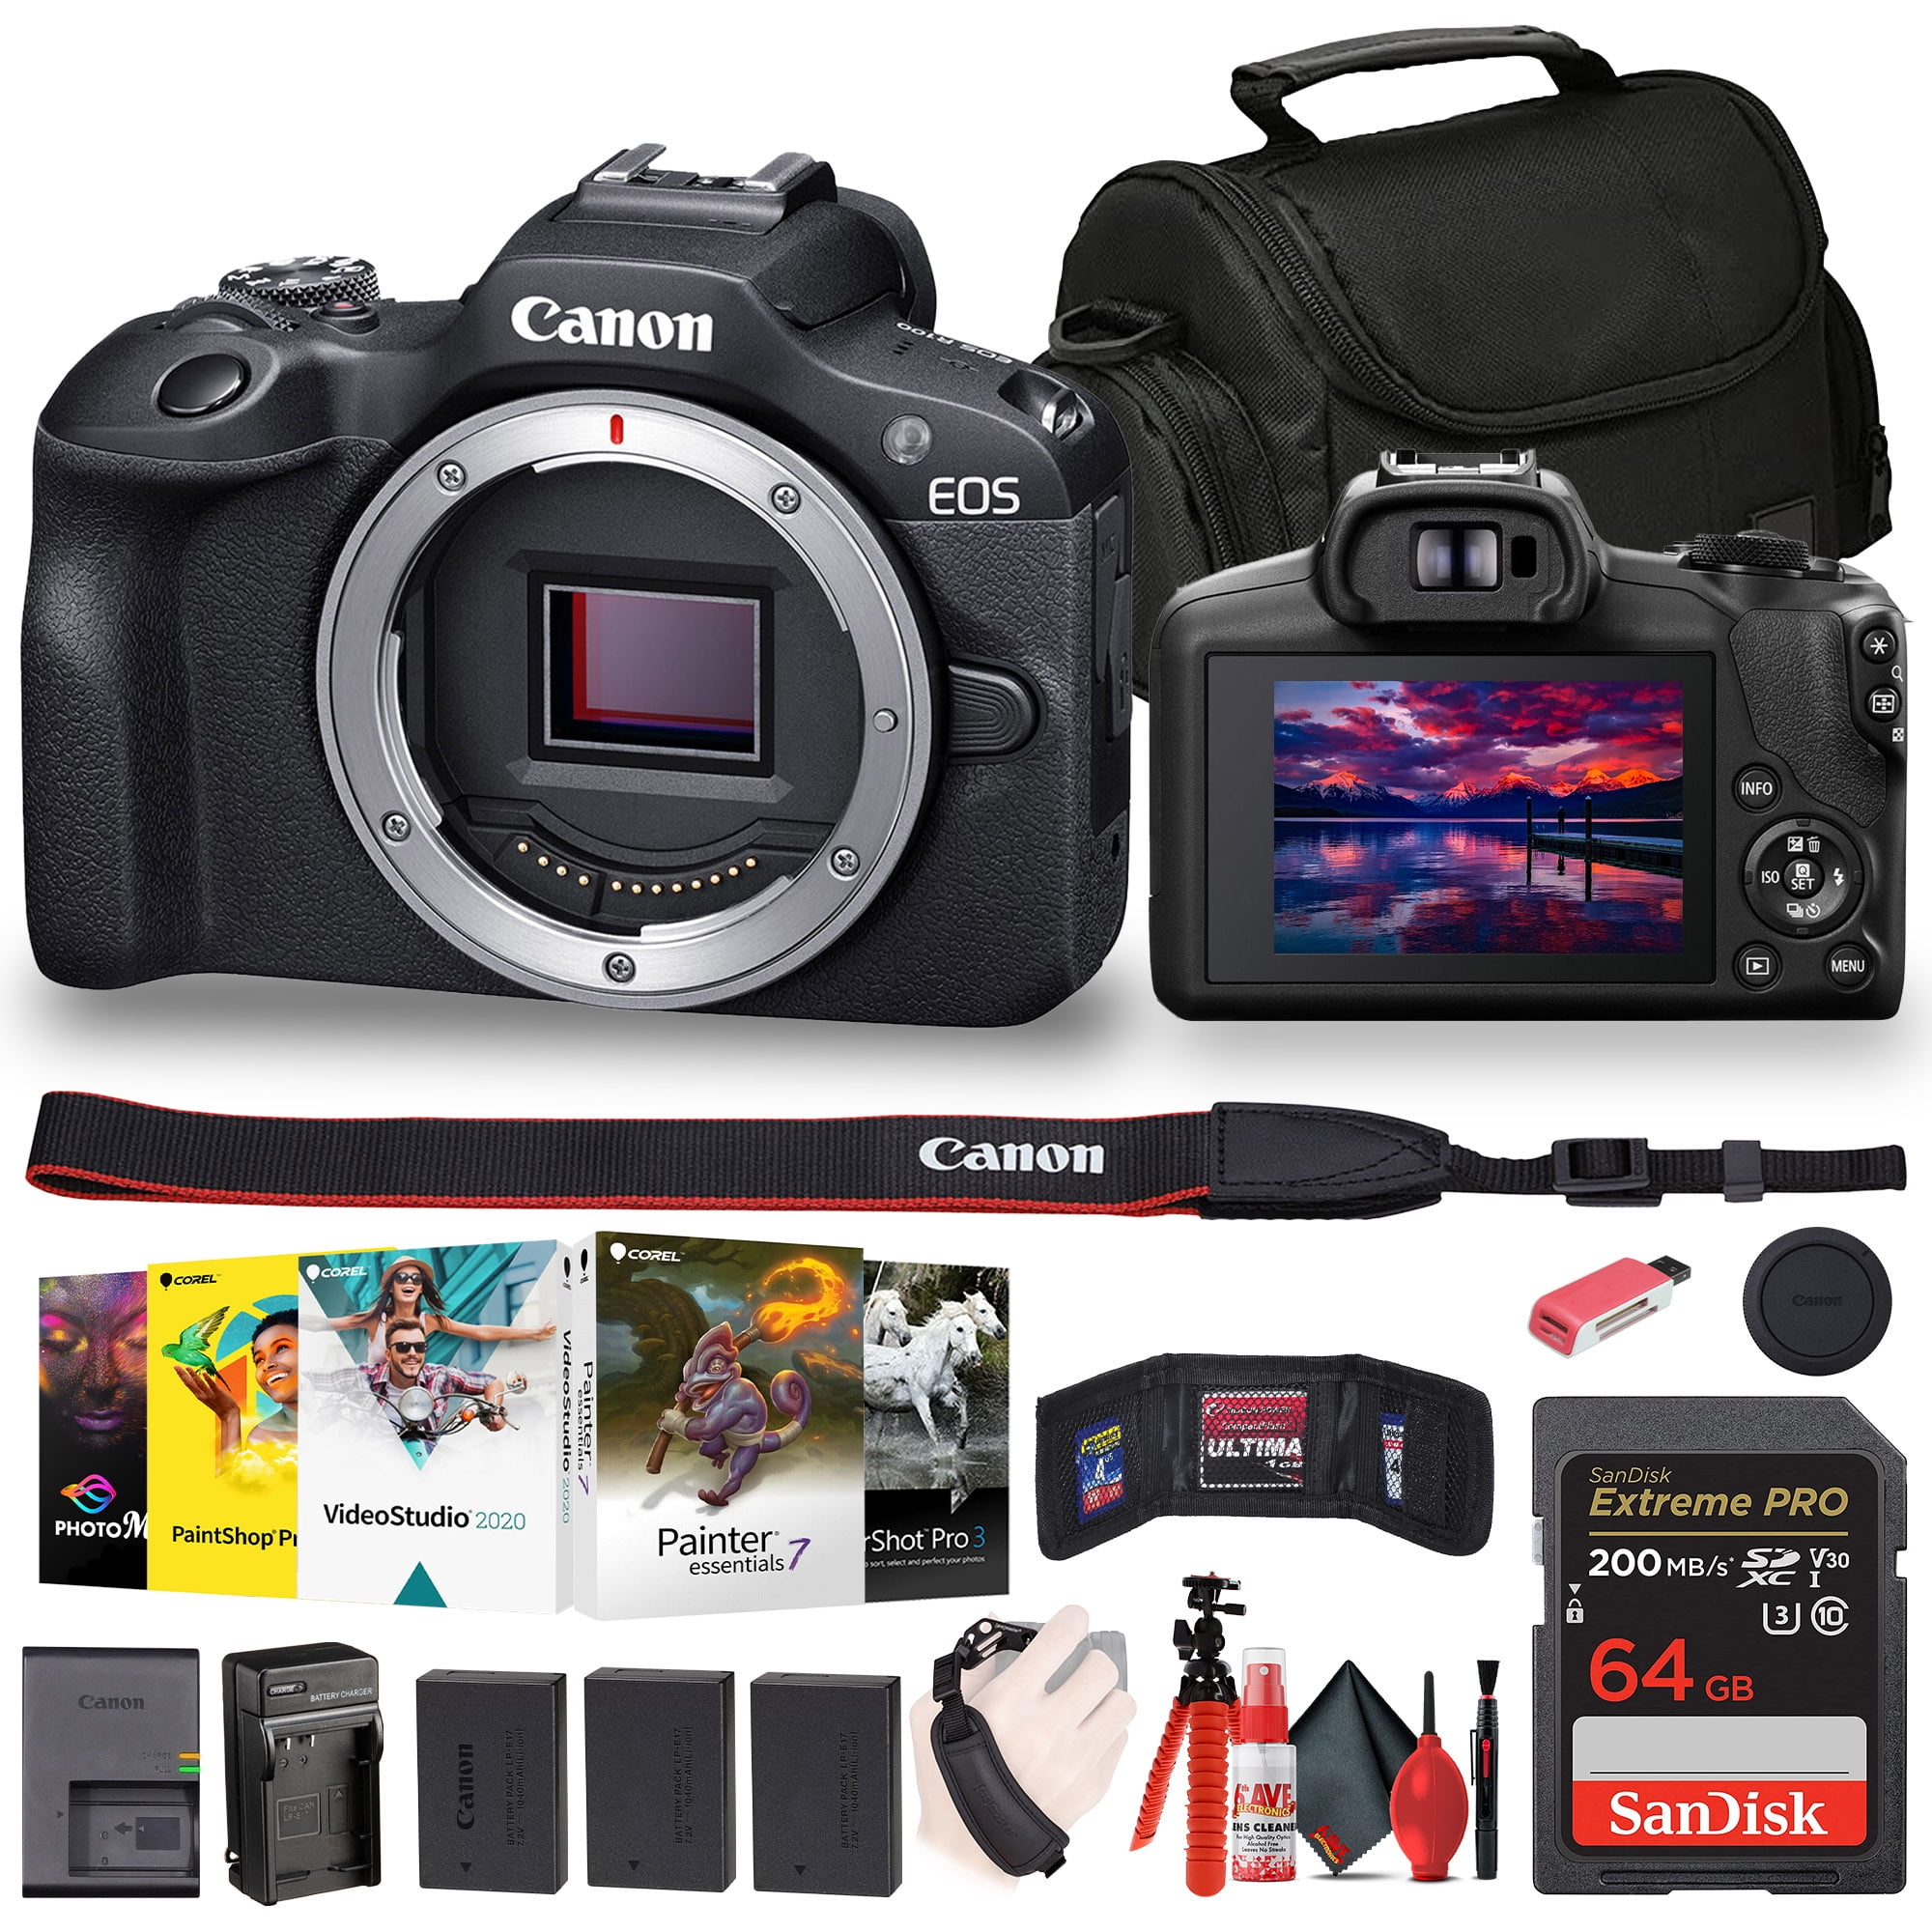  Canon PowerShot G7 X Mark II 20.1MP Digital Camera Bundle Kit  with Spider Tripod and 16 GB Memory Card : Electronics